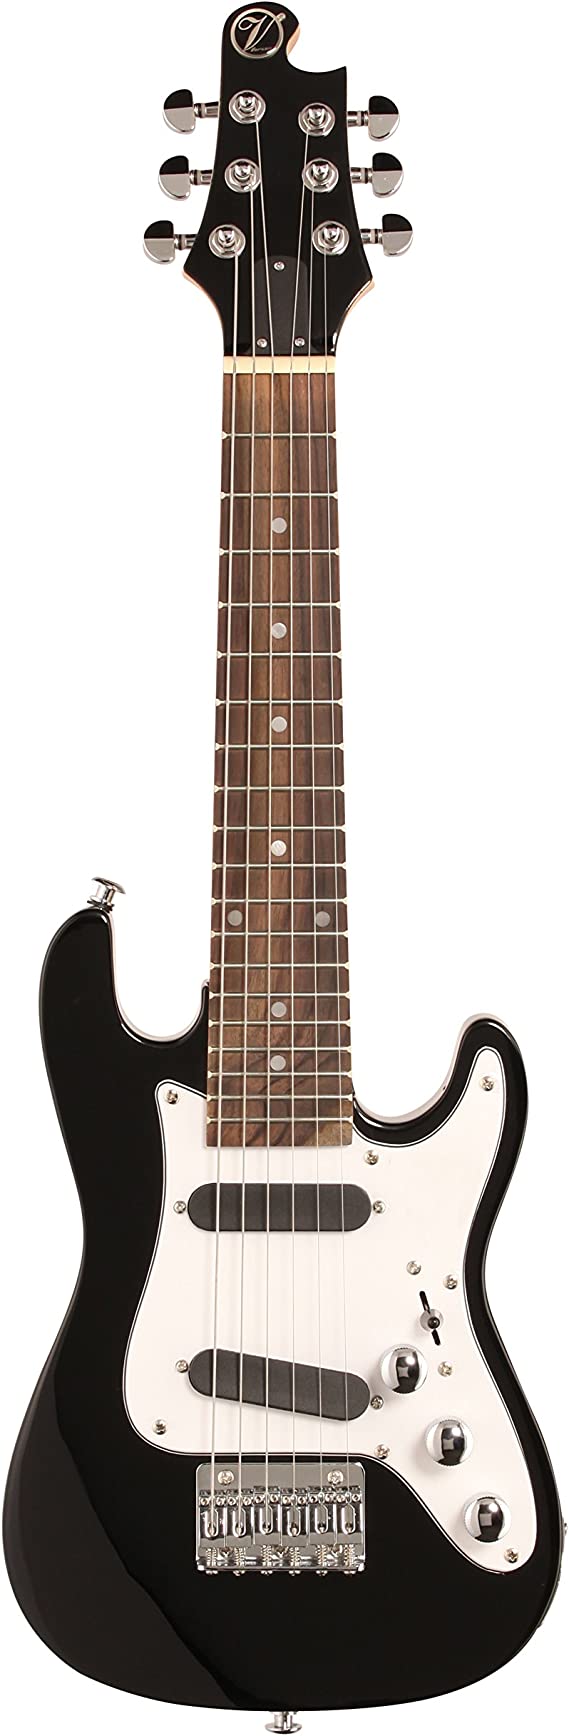 Vorson EGL-ST S-Style Guitarlele Travel Electric Guitar with Gigbag, Black